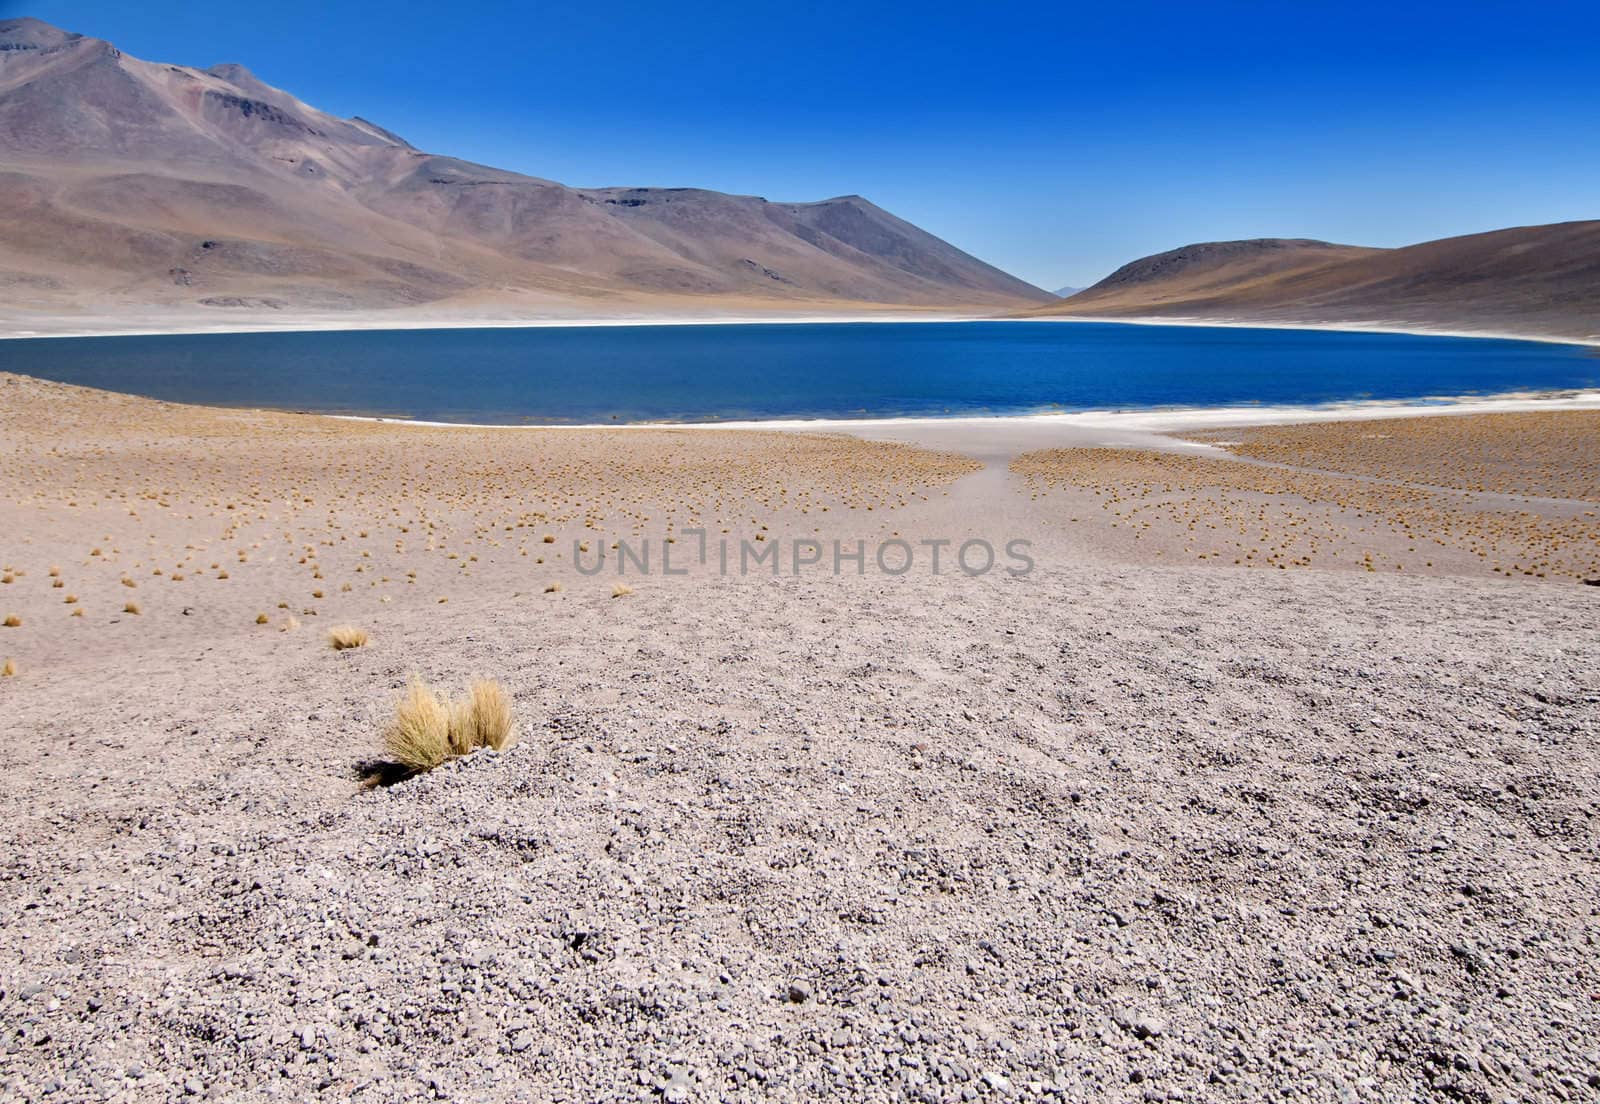 Laguna (Lake) Miscanti in the Chilean desert, over 4000m above sea level.